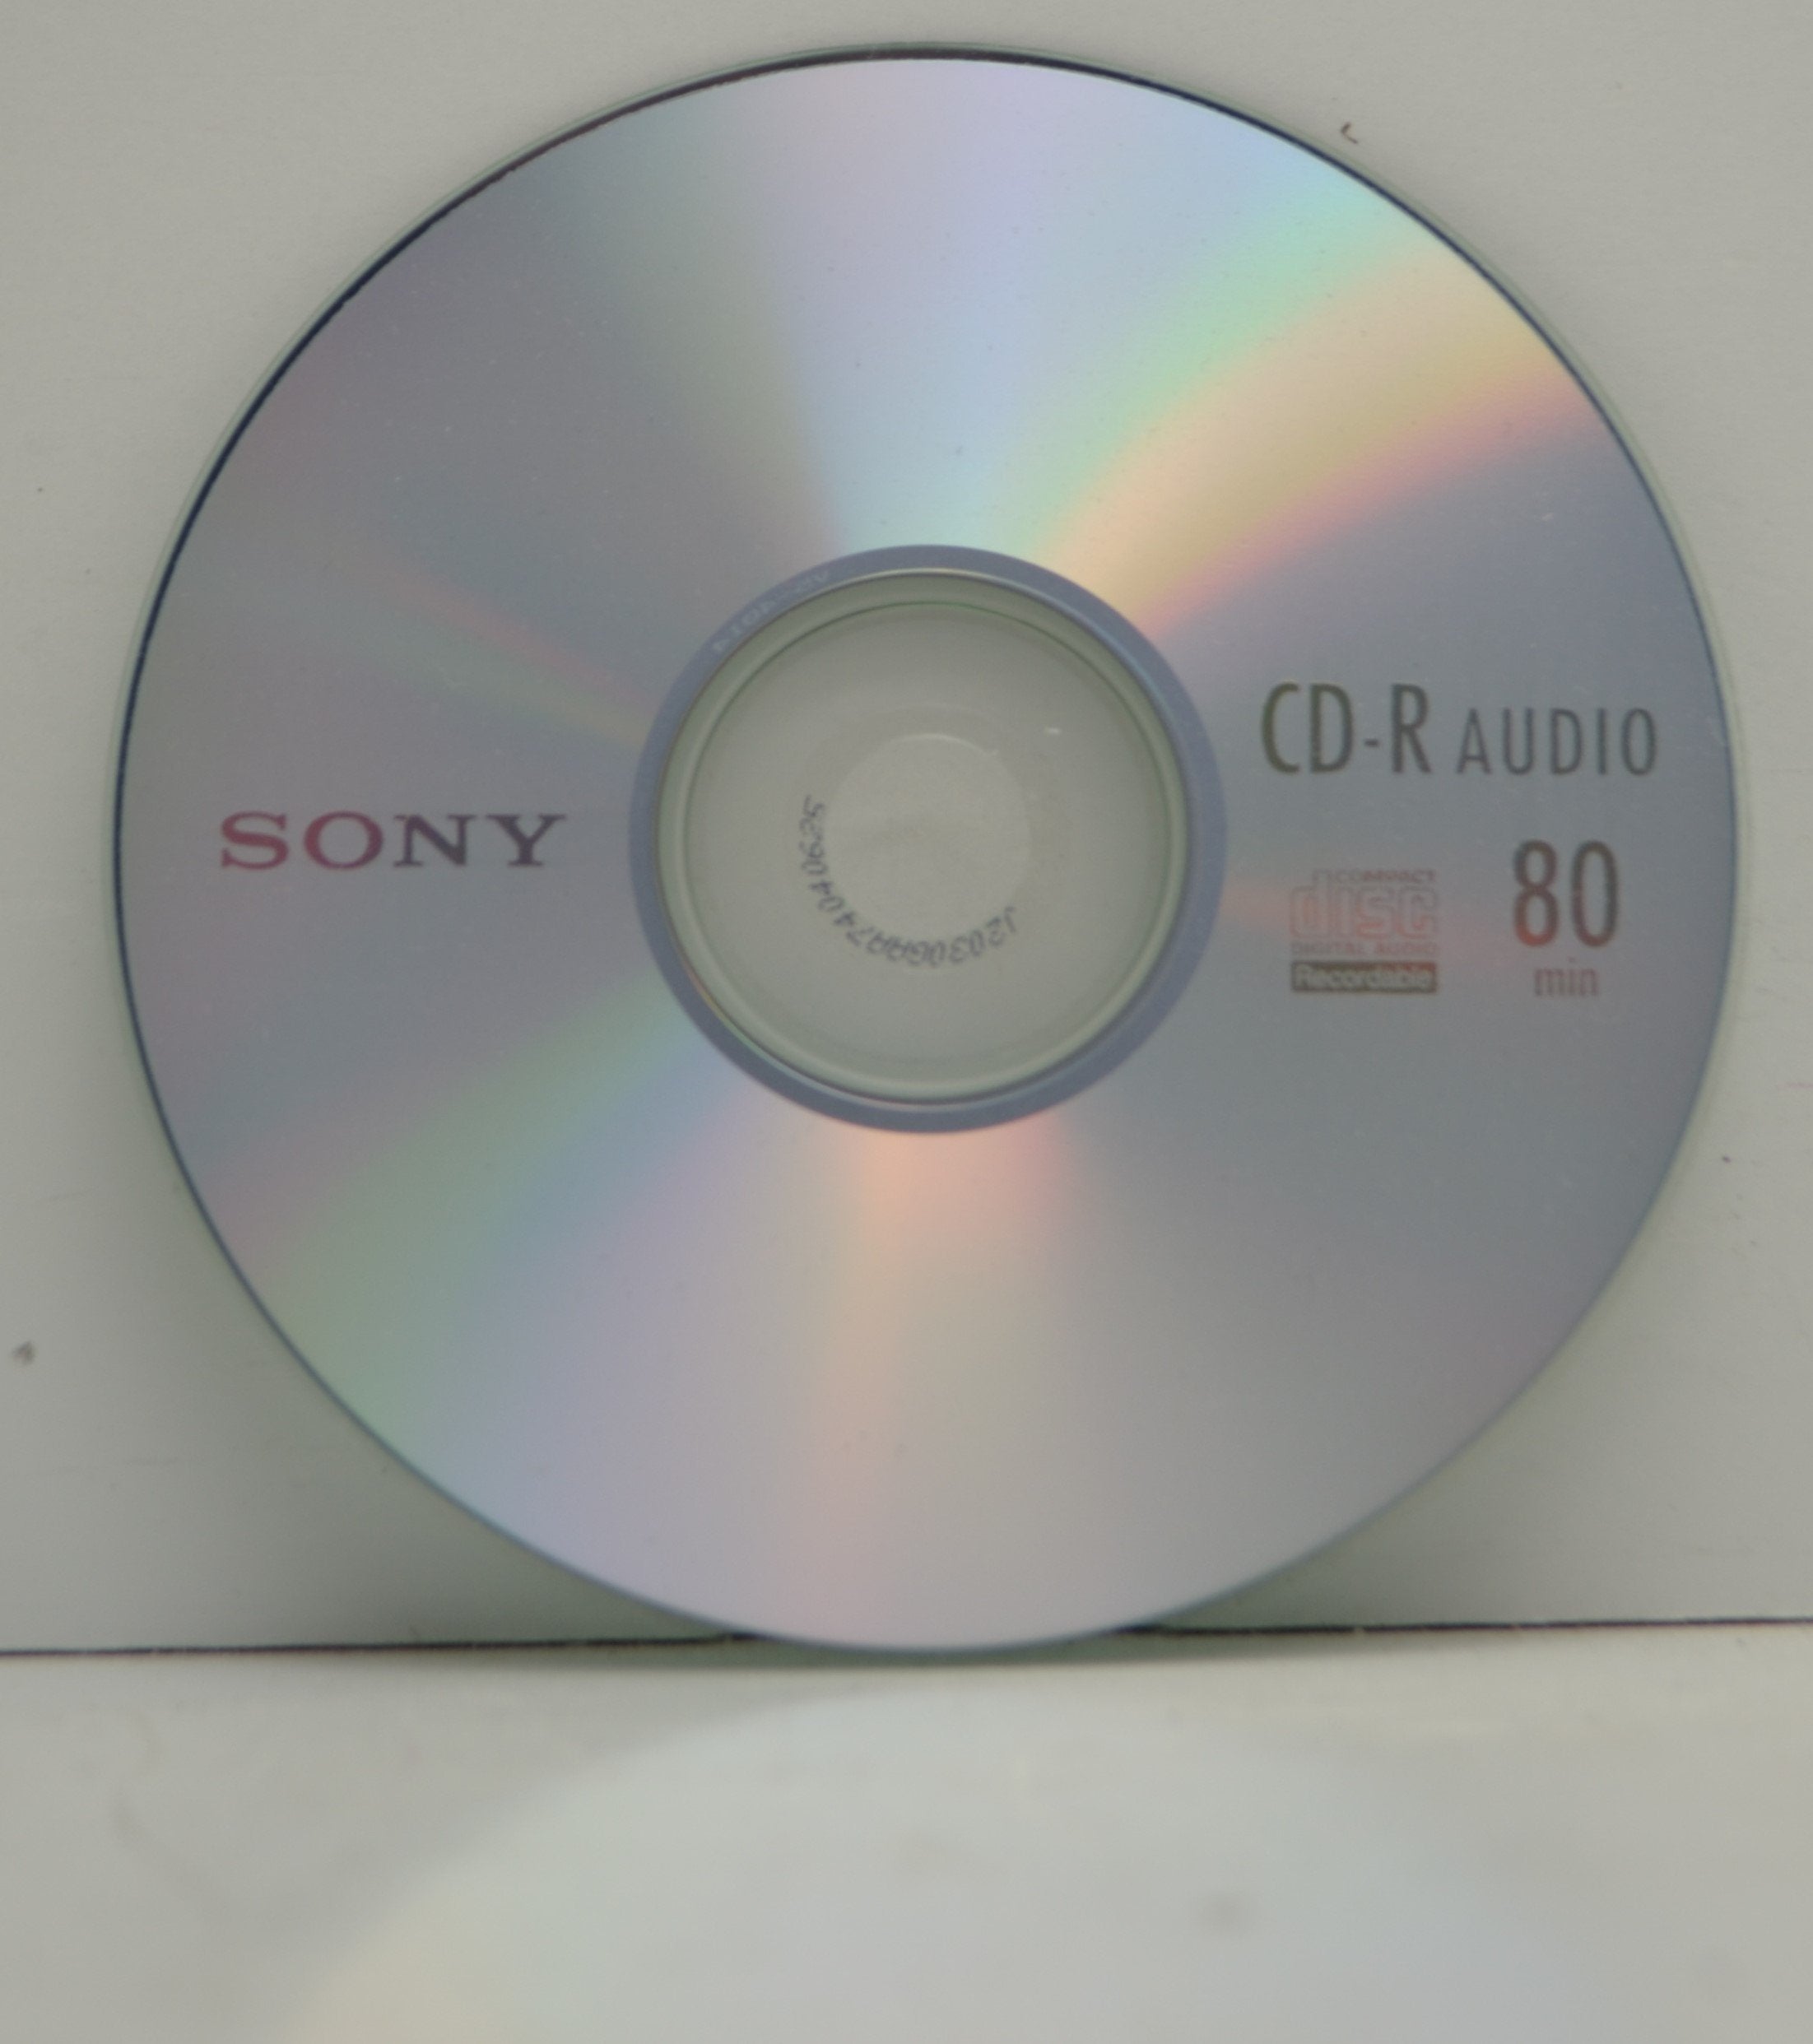 SONY CD-R